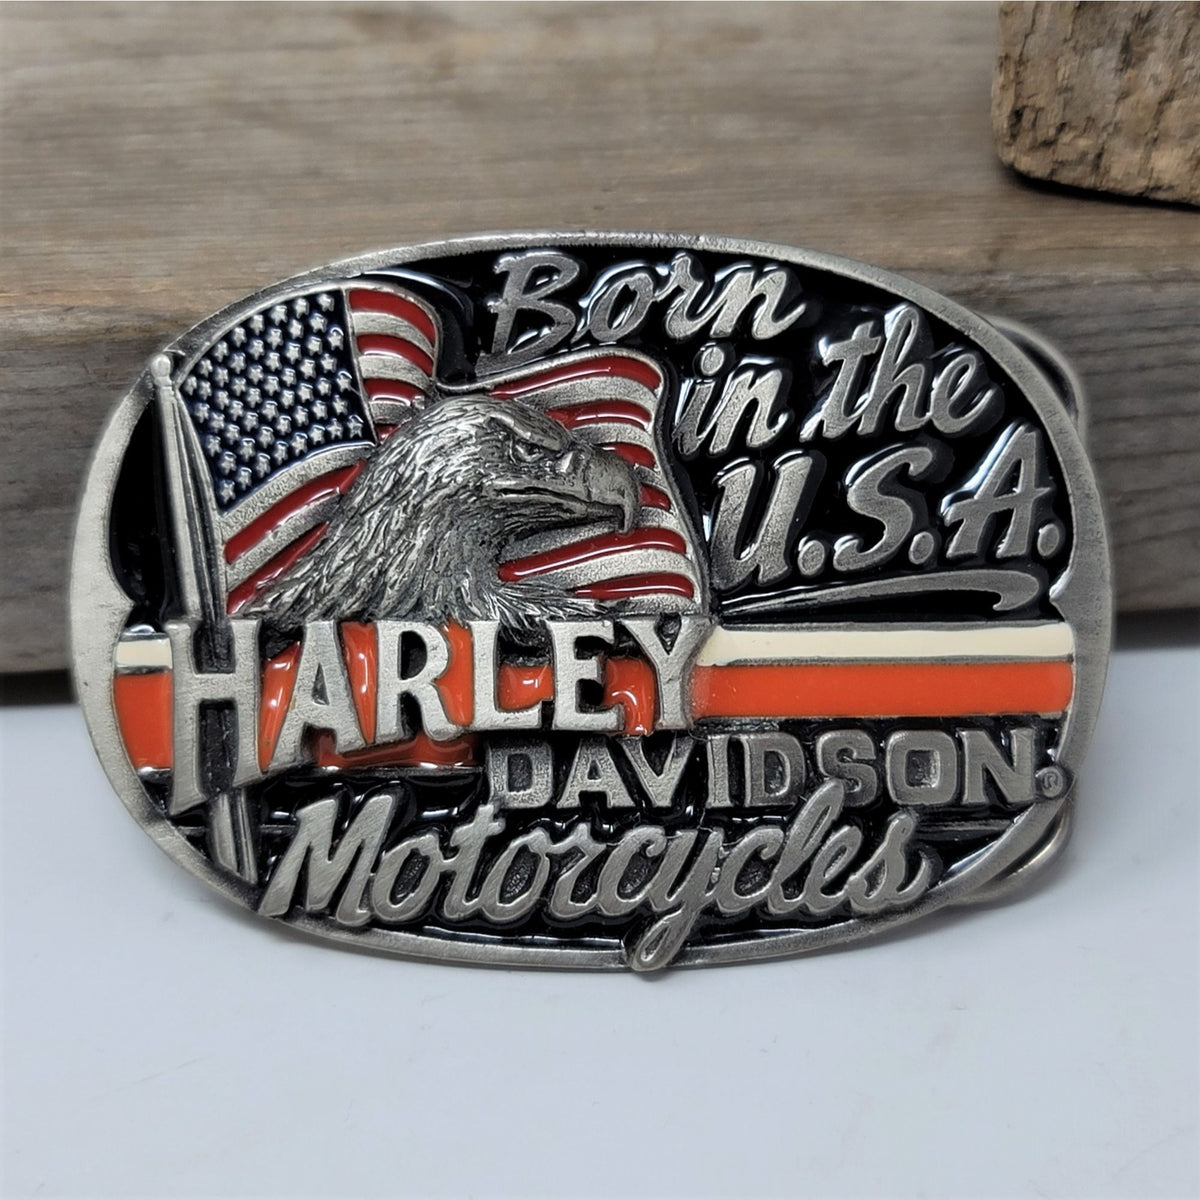 Harley Davidson Made in USA Silver Belt Buckle